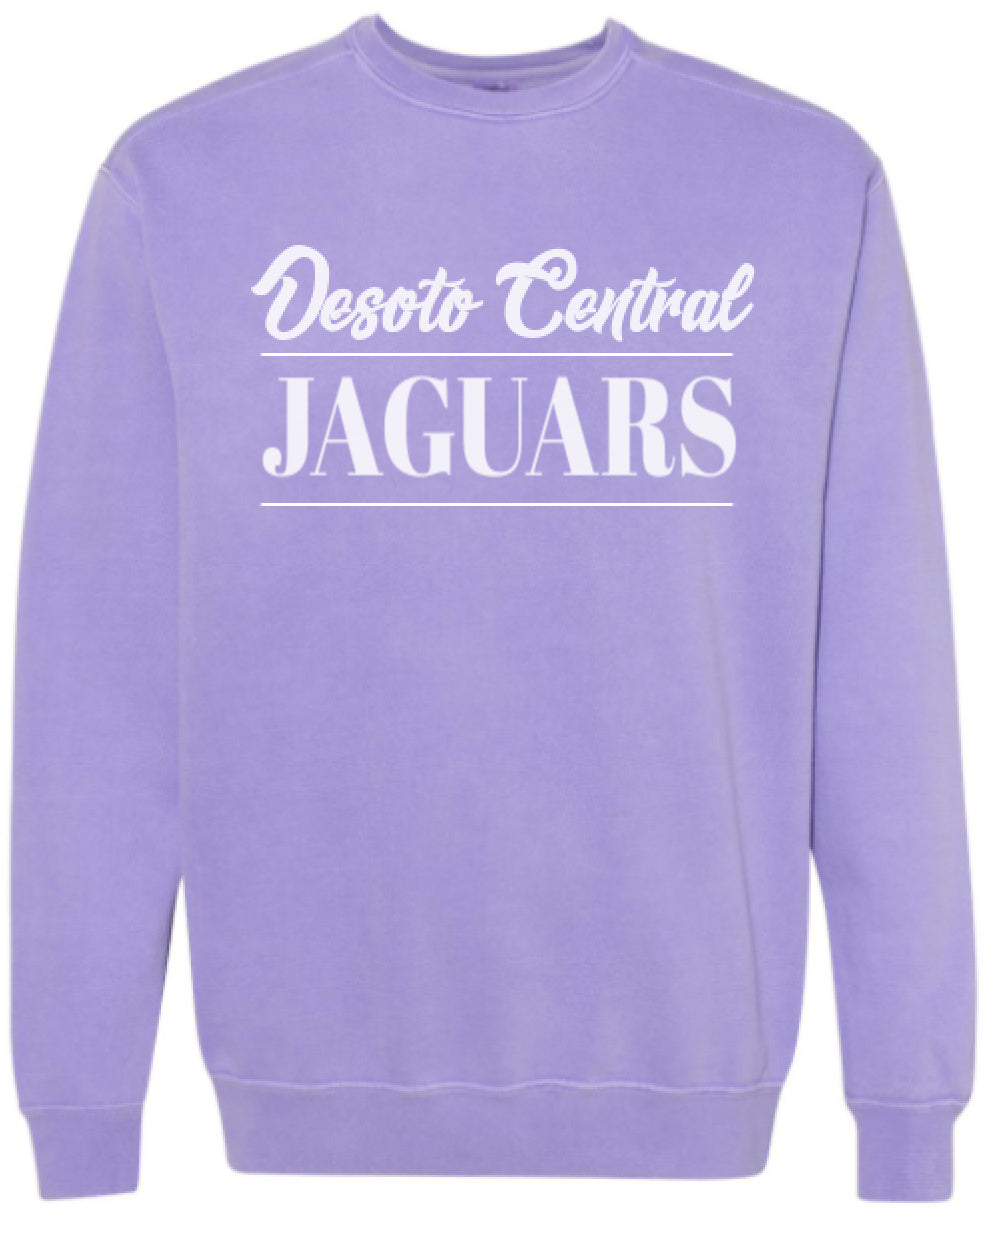 Desoto Central Jaguars Comfort Colors Sweatshirts